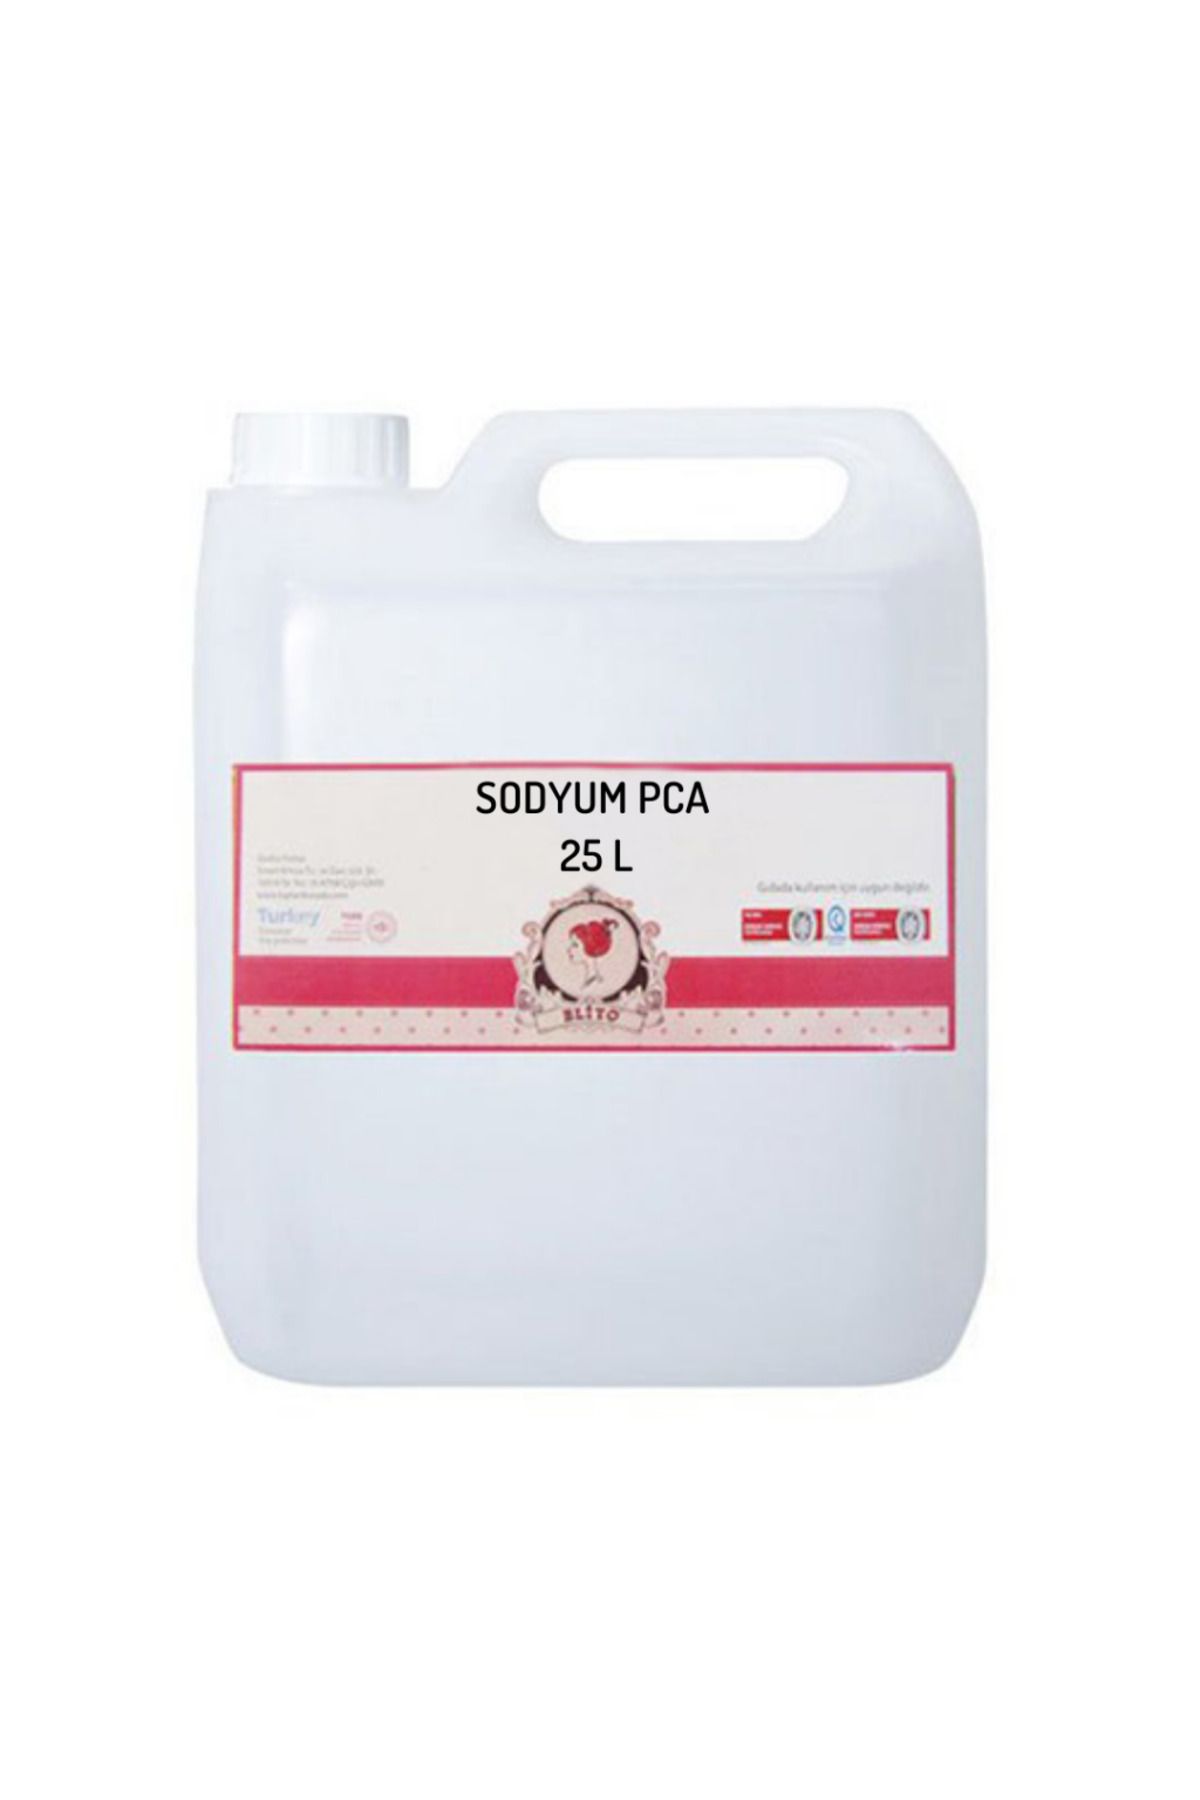 elito Sodyum PCA 25 litre